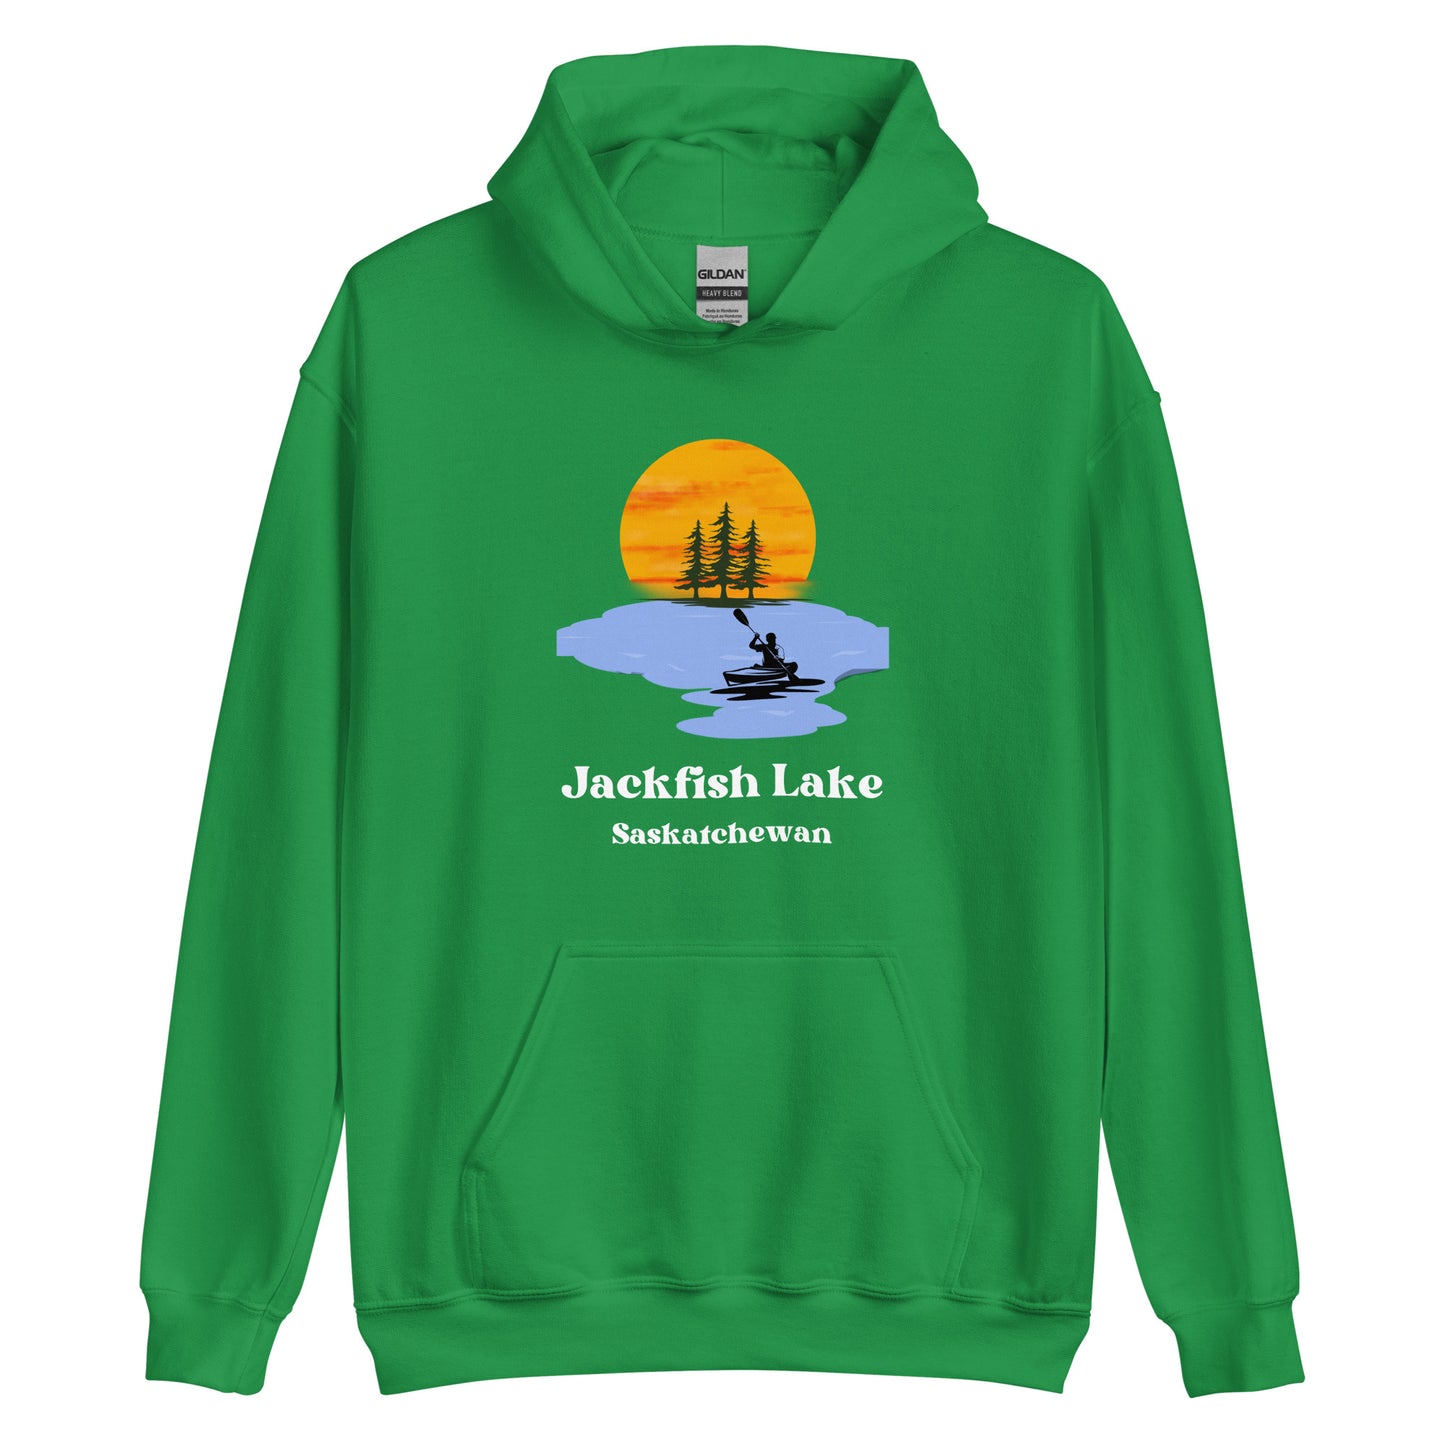 Jackfish Lake, SK - Unisex Hoodie - Kayak